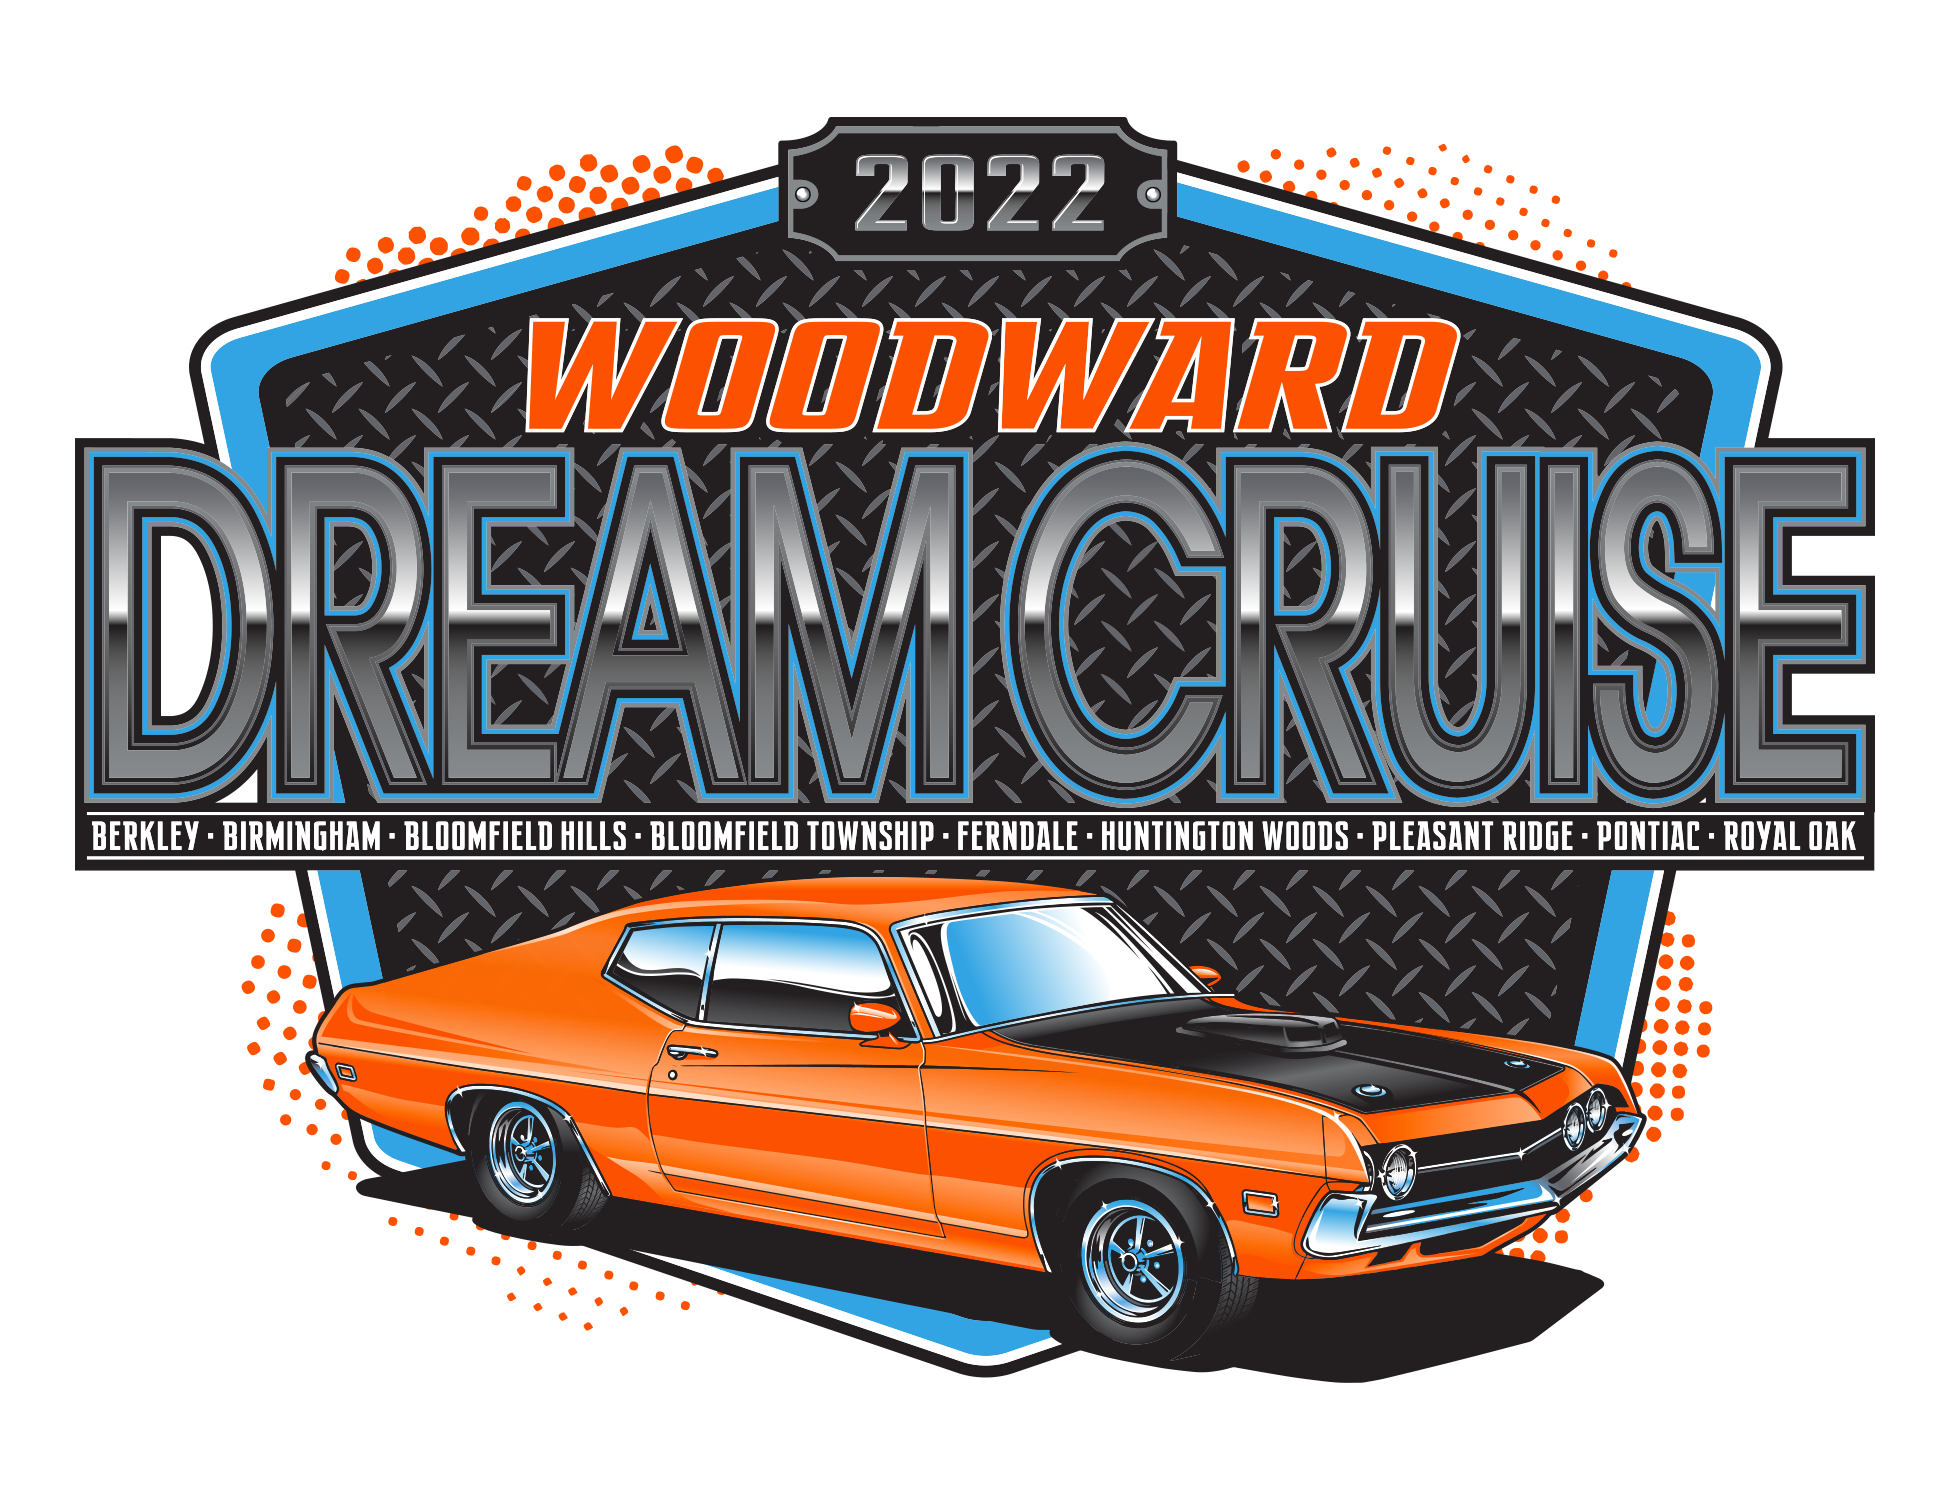 DemoPage Woodward Dream Cruise